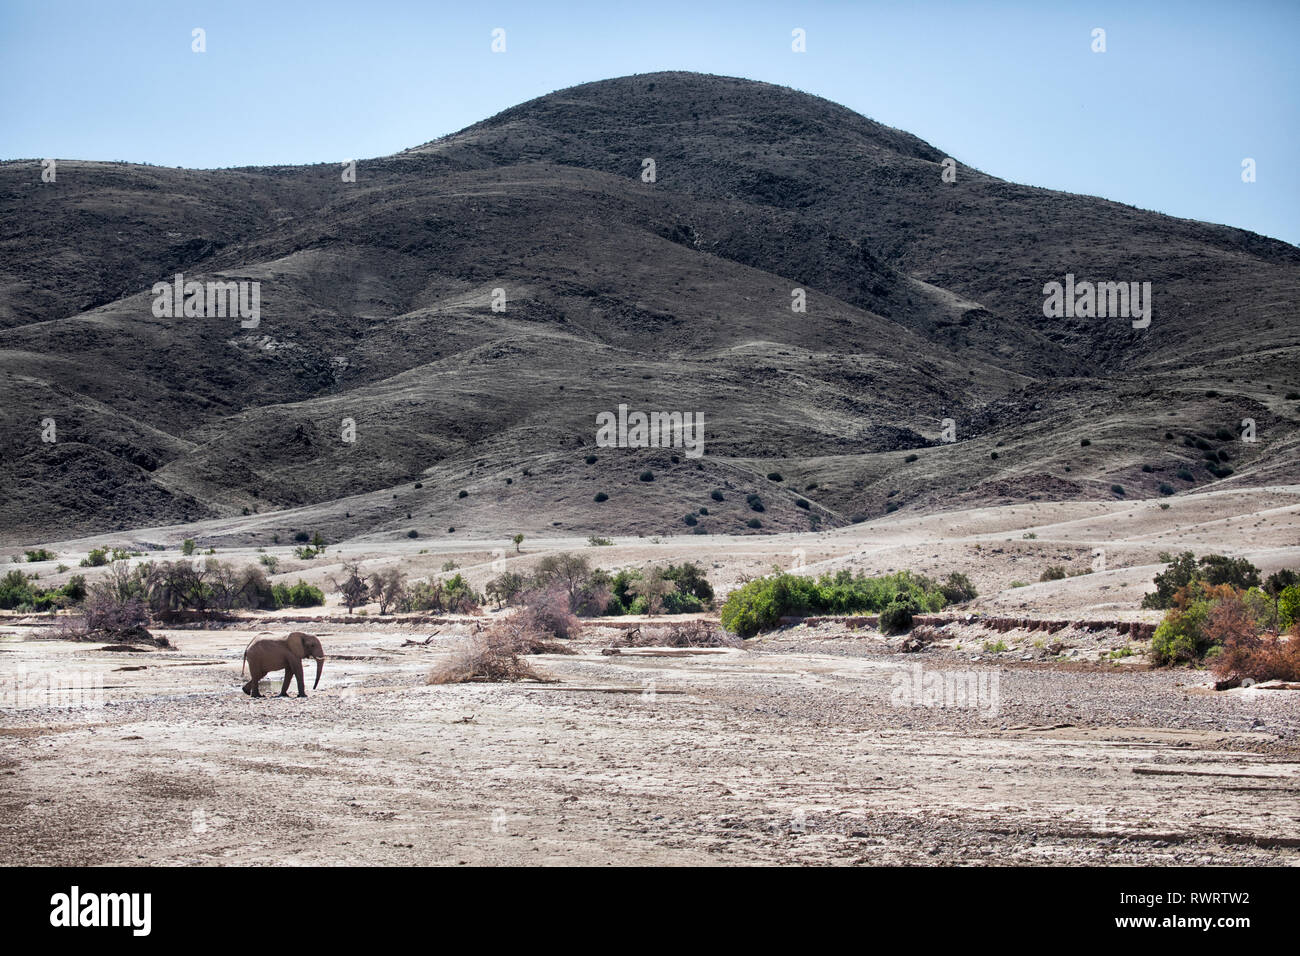 A desert Elephant near Purros, Namibia. Stock Photo